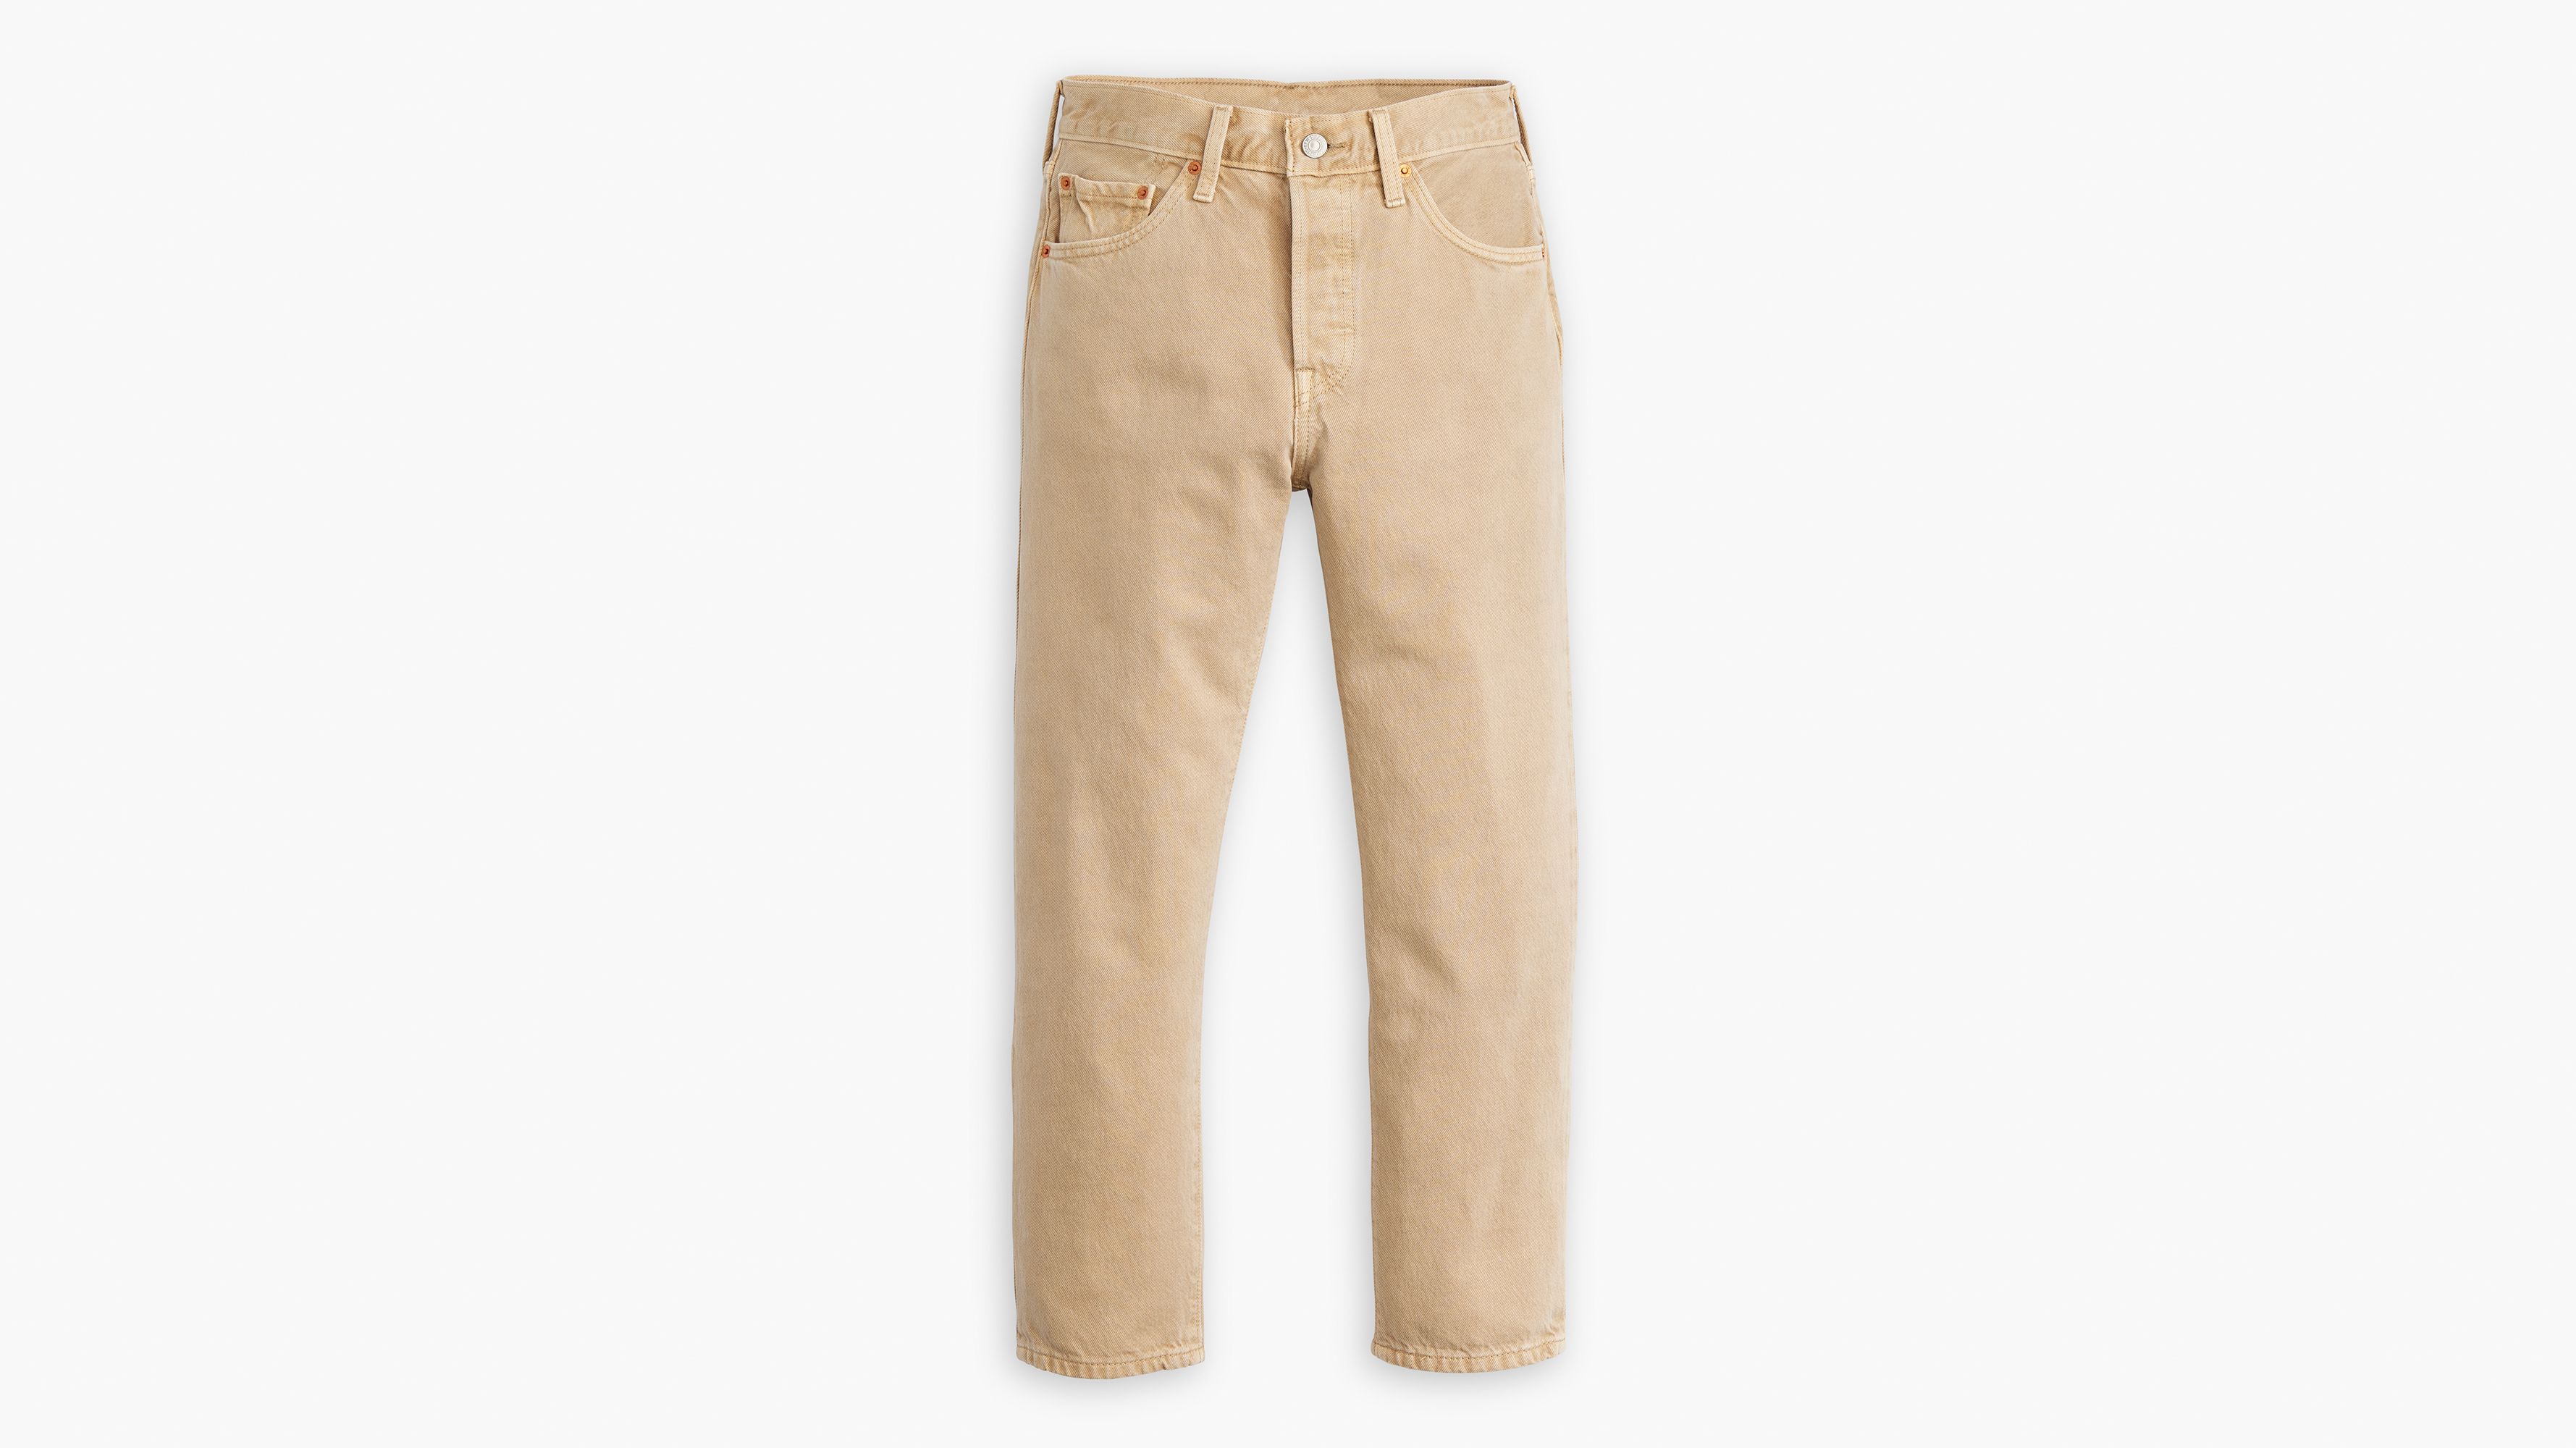 Levi's Dusty Safari Crema Jeans Recortados 501 Original